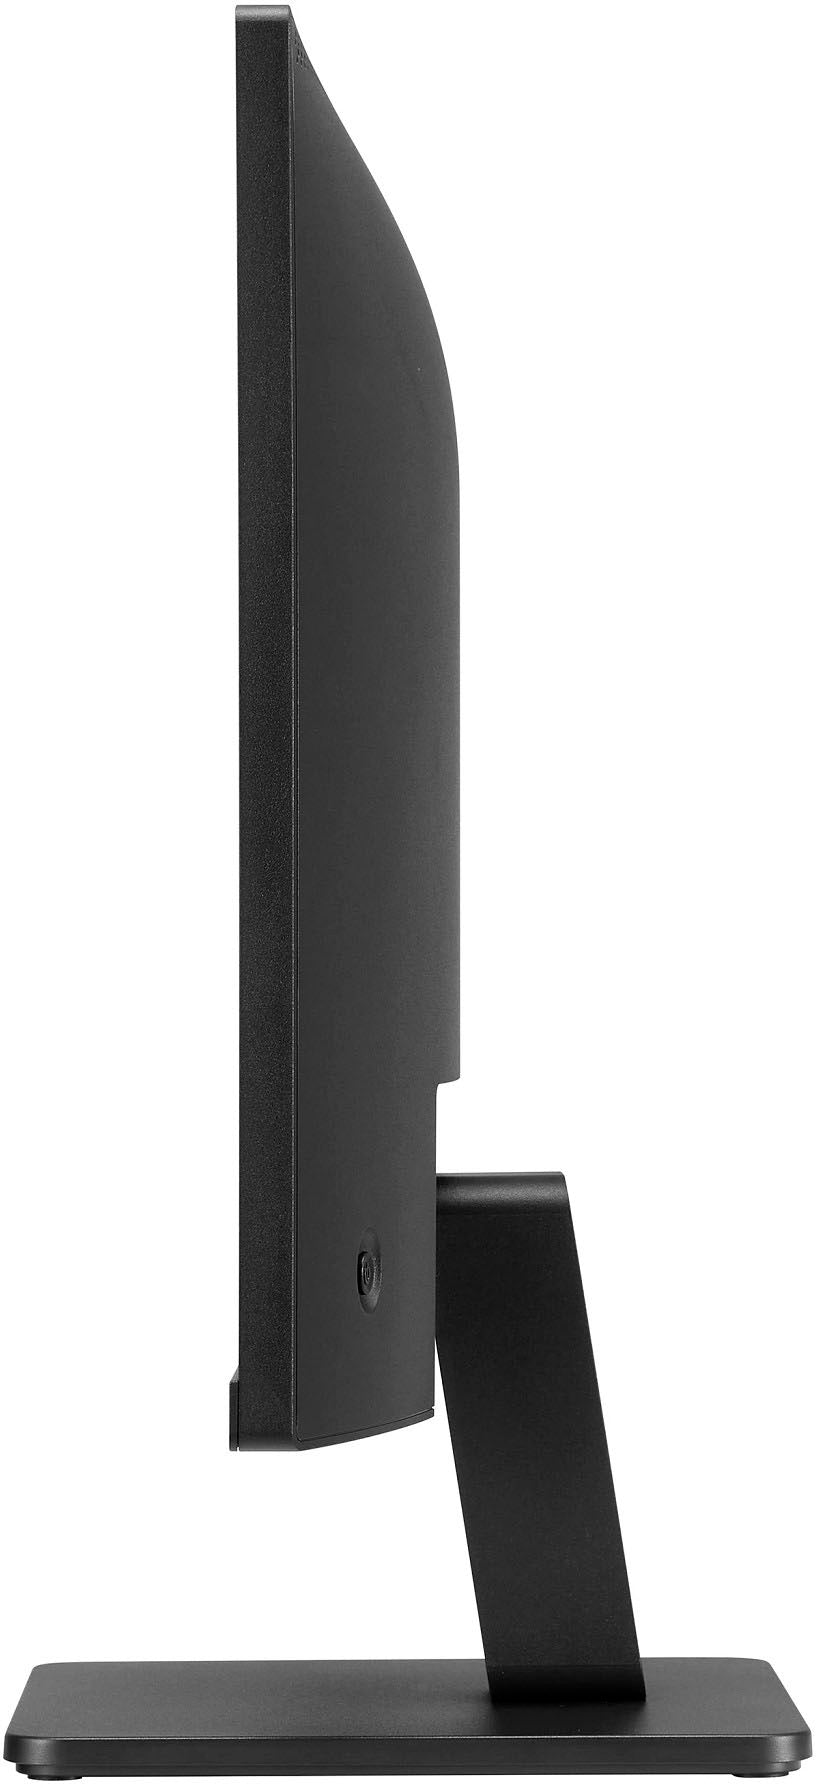 LG - 24" IPS FHD FreeSync Monitor (HDMI) - Black_6